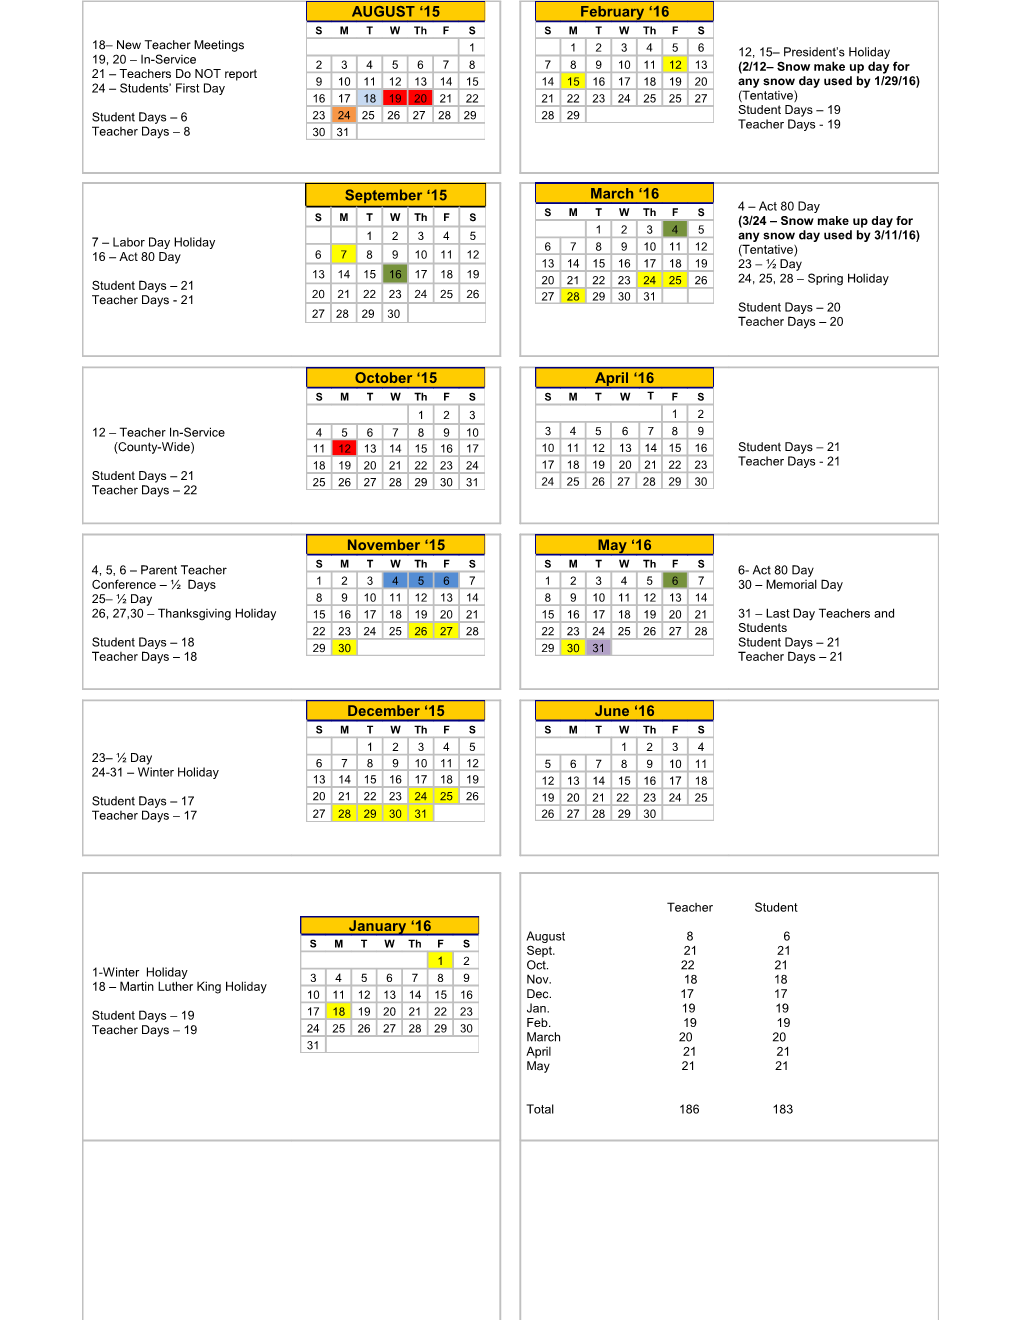 Panther Valley 2015-2016 School Calendar